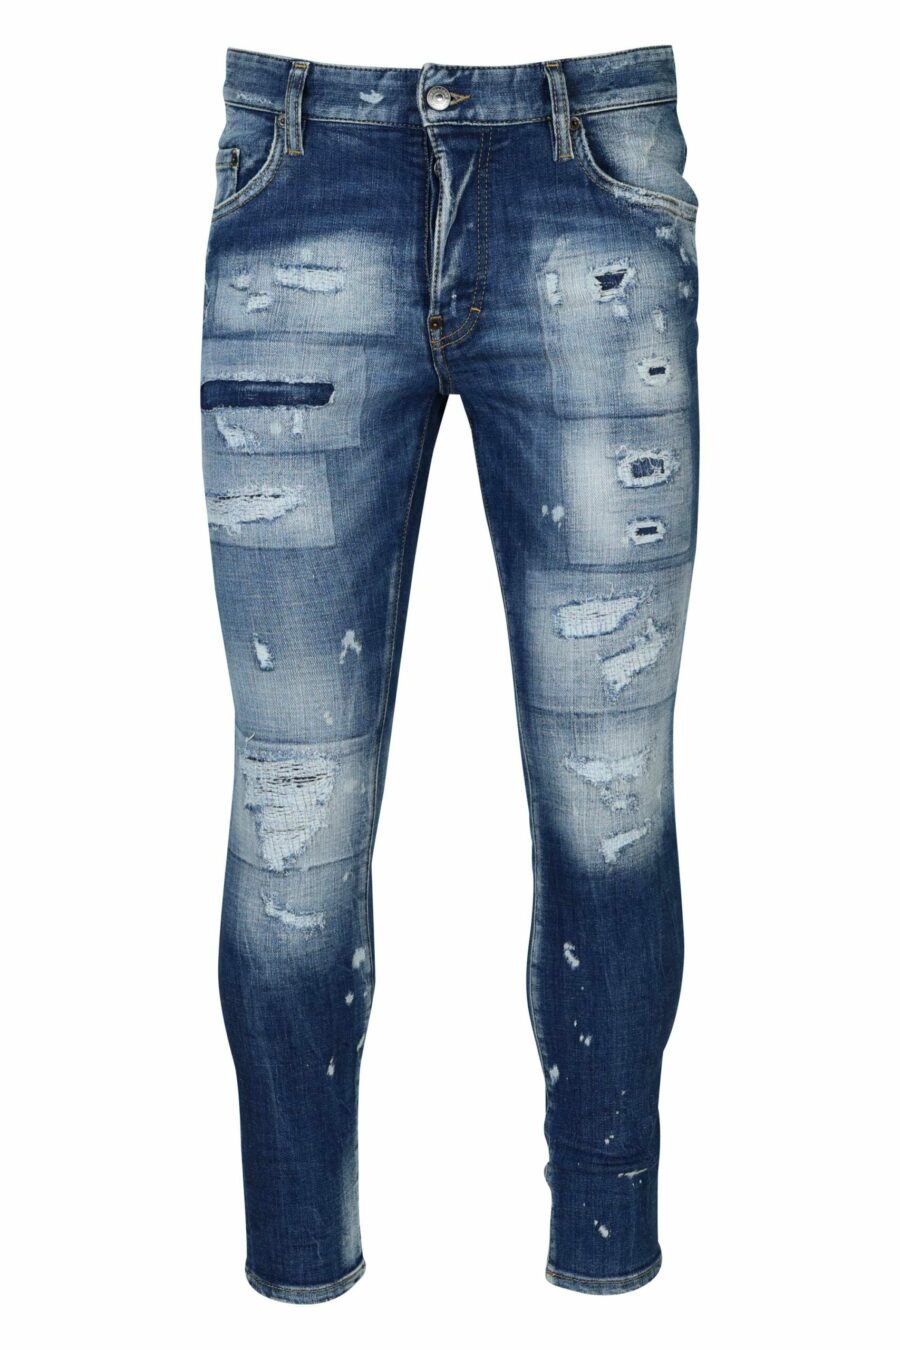 Pantalón vaquero azul "super twinky jean" desgastado con rotos - 8054148339029 scaled